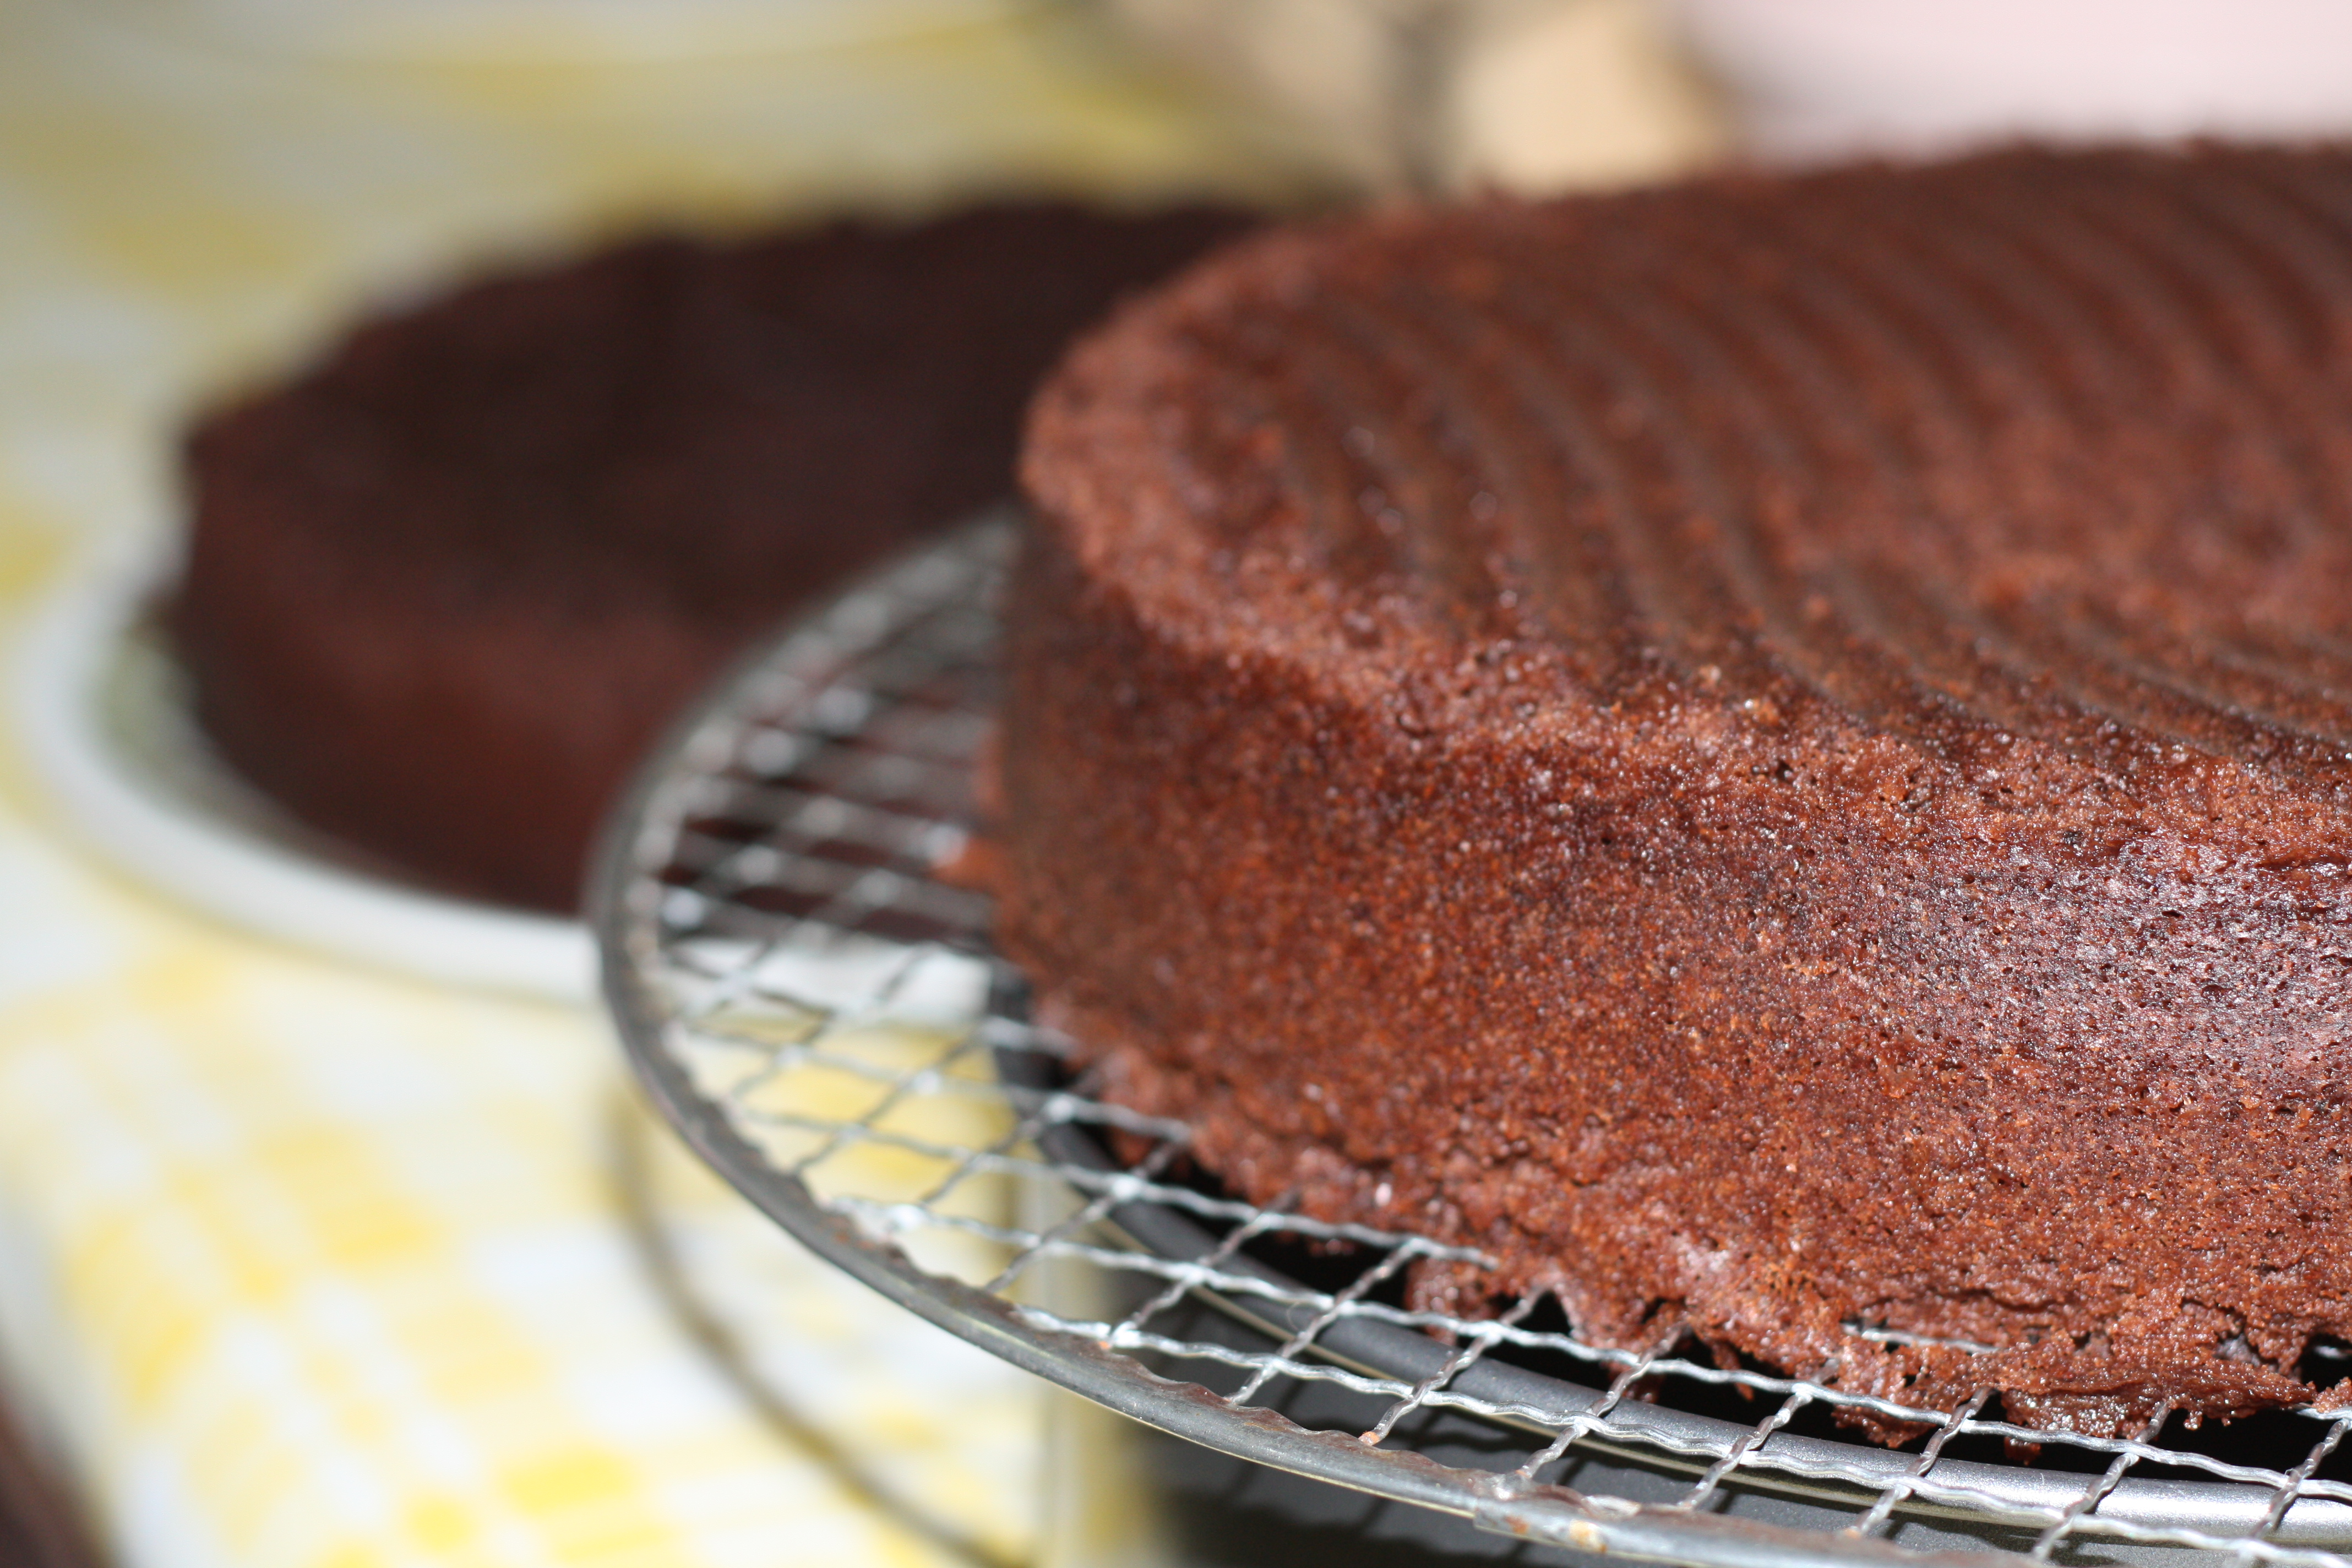 microwave chocolate cake